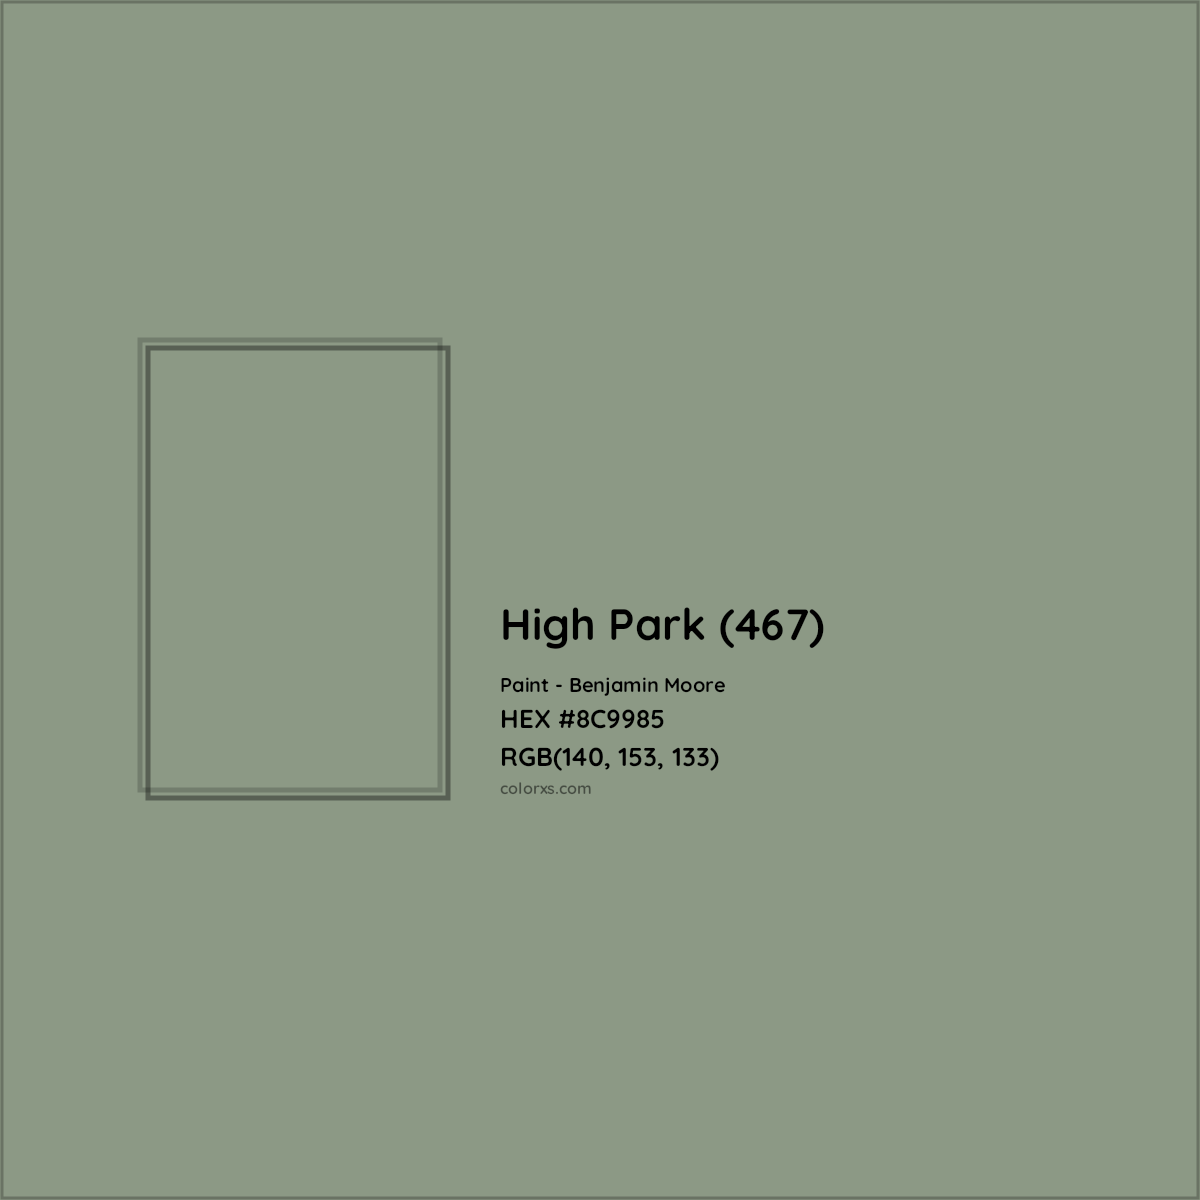 HEX #8C9985 High Park (467) Paint Benjamin Moore - Color Code